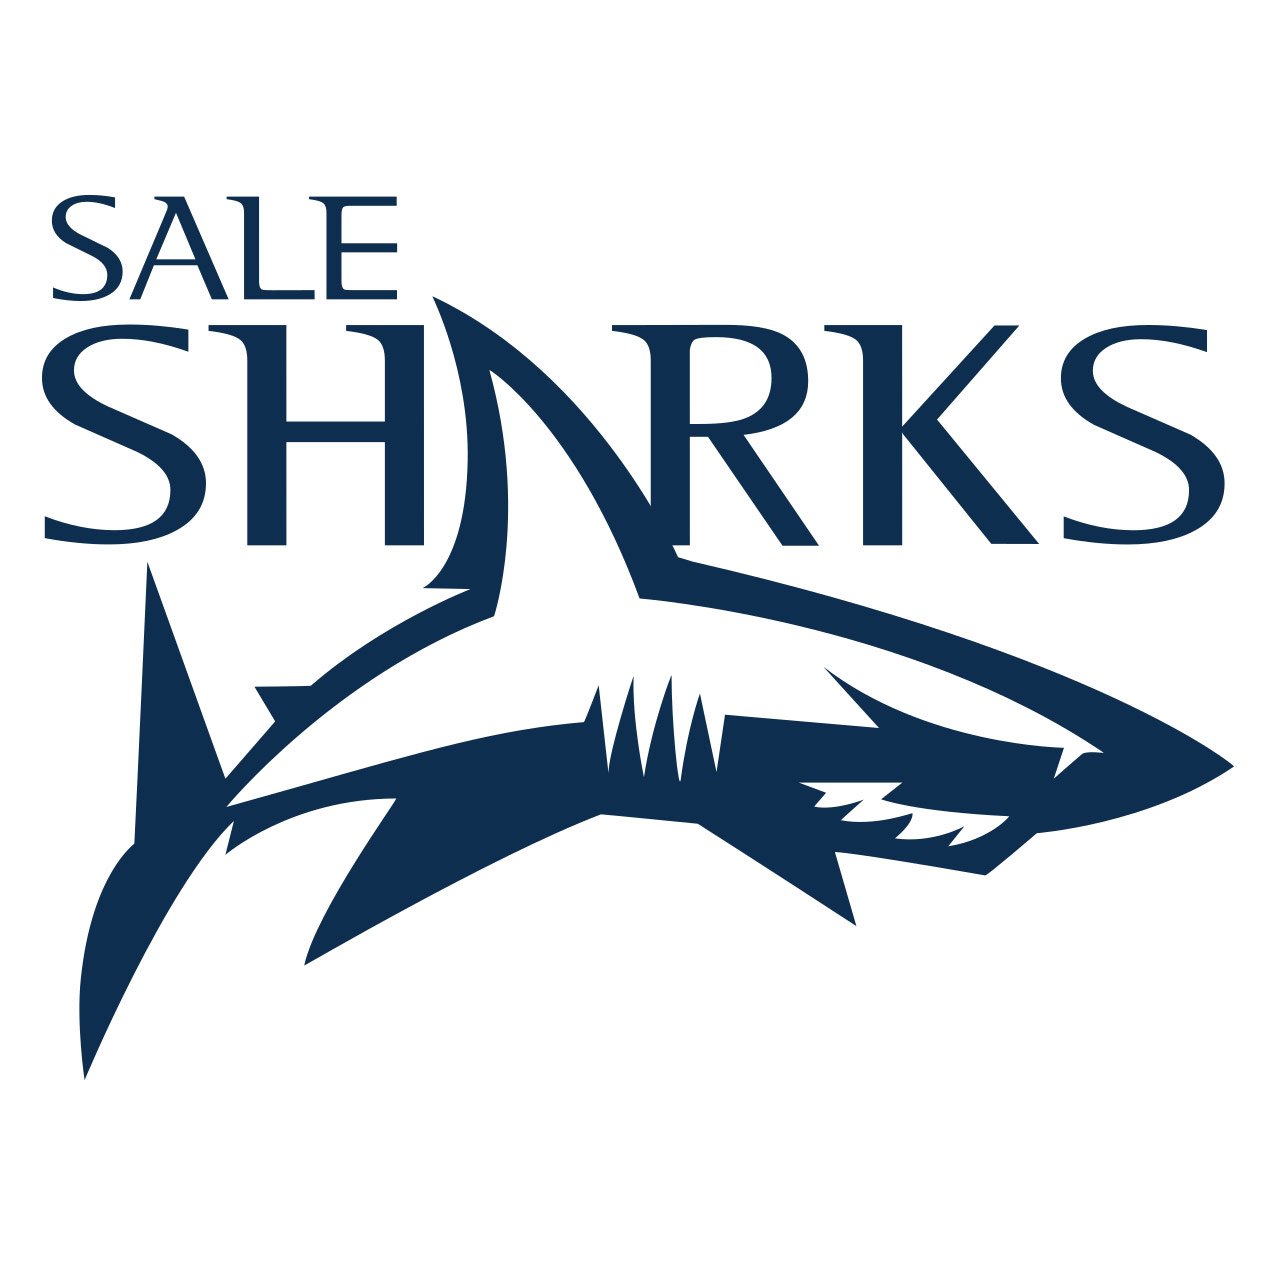 Sale_Sharks_logo.jpg